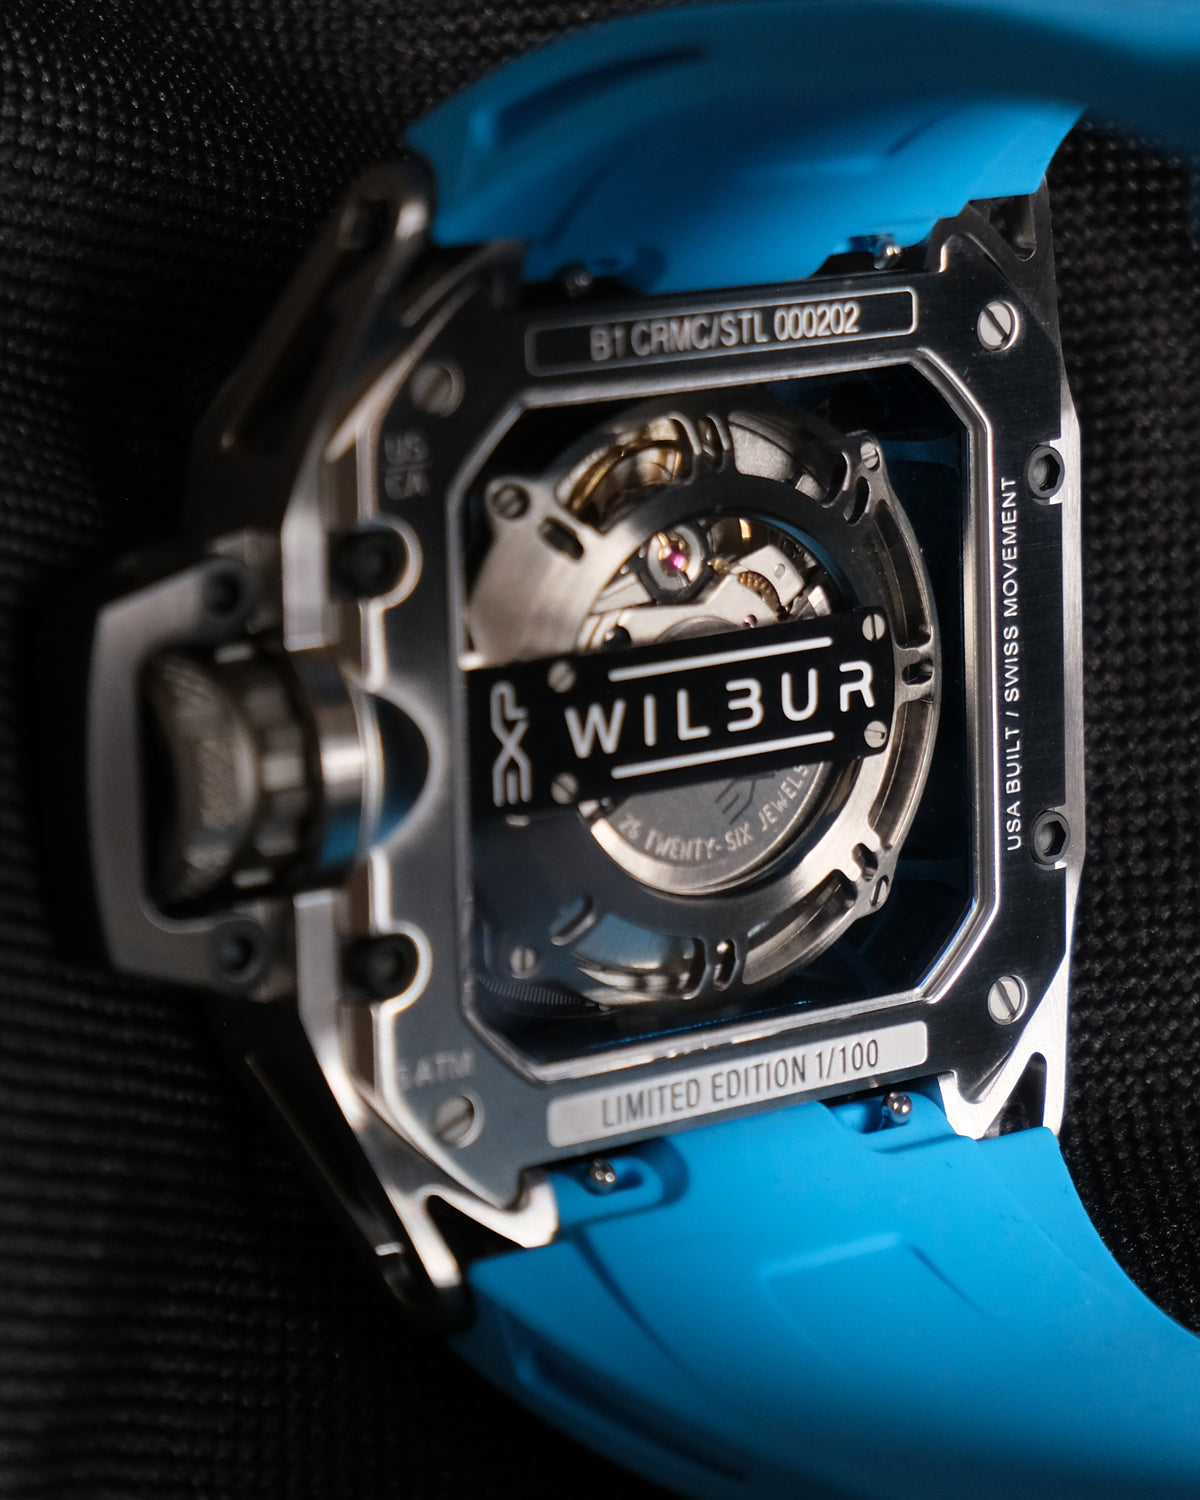 WILBUR EXP Blue B1 Ceramic Steel Luxury Watch USA made Back